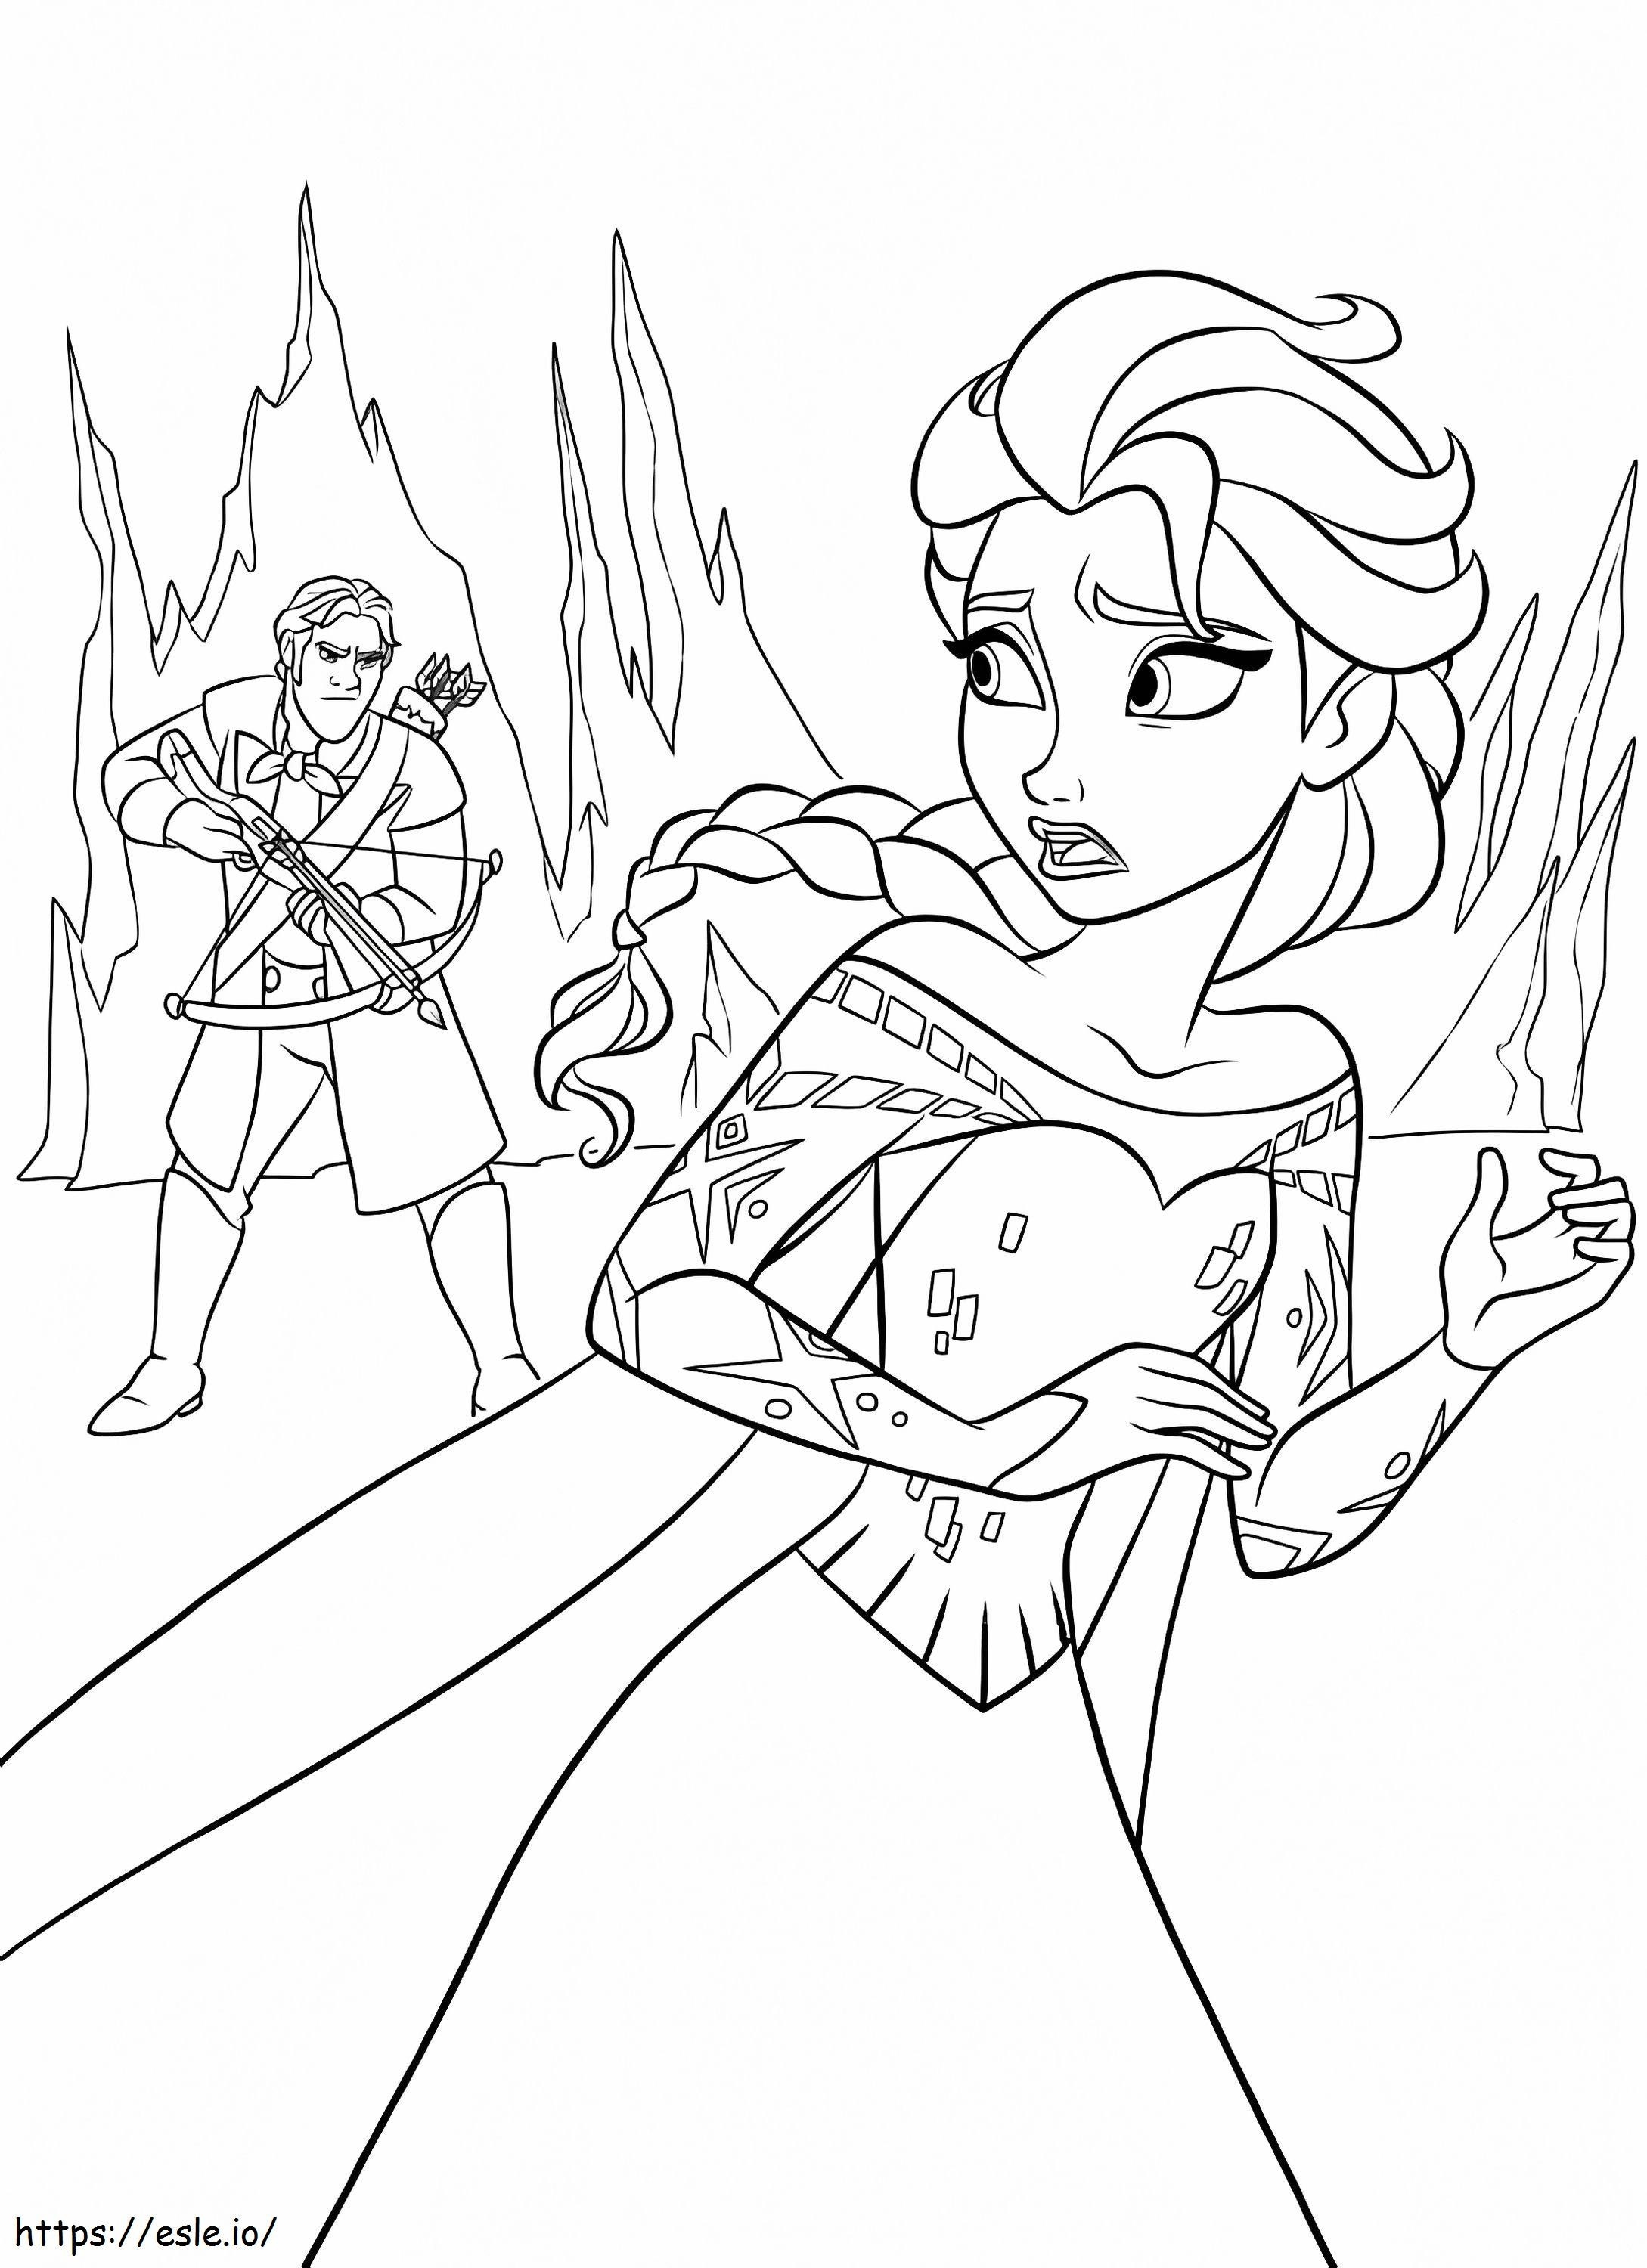 Hans Arttacking Elsa coloring page